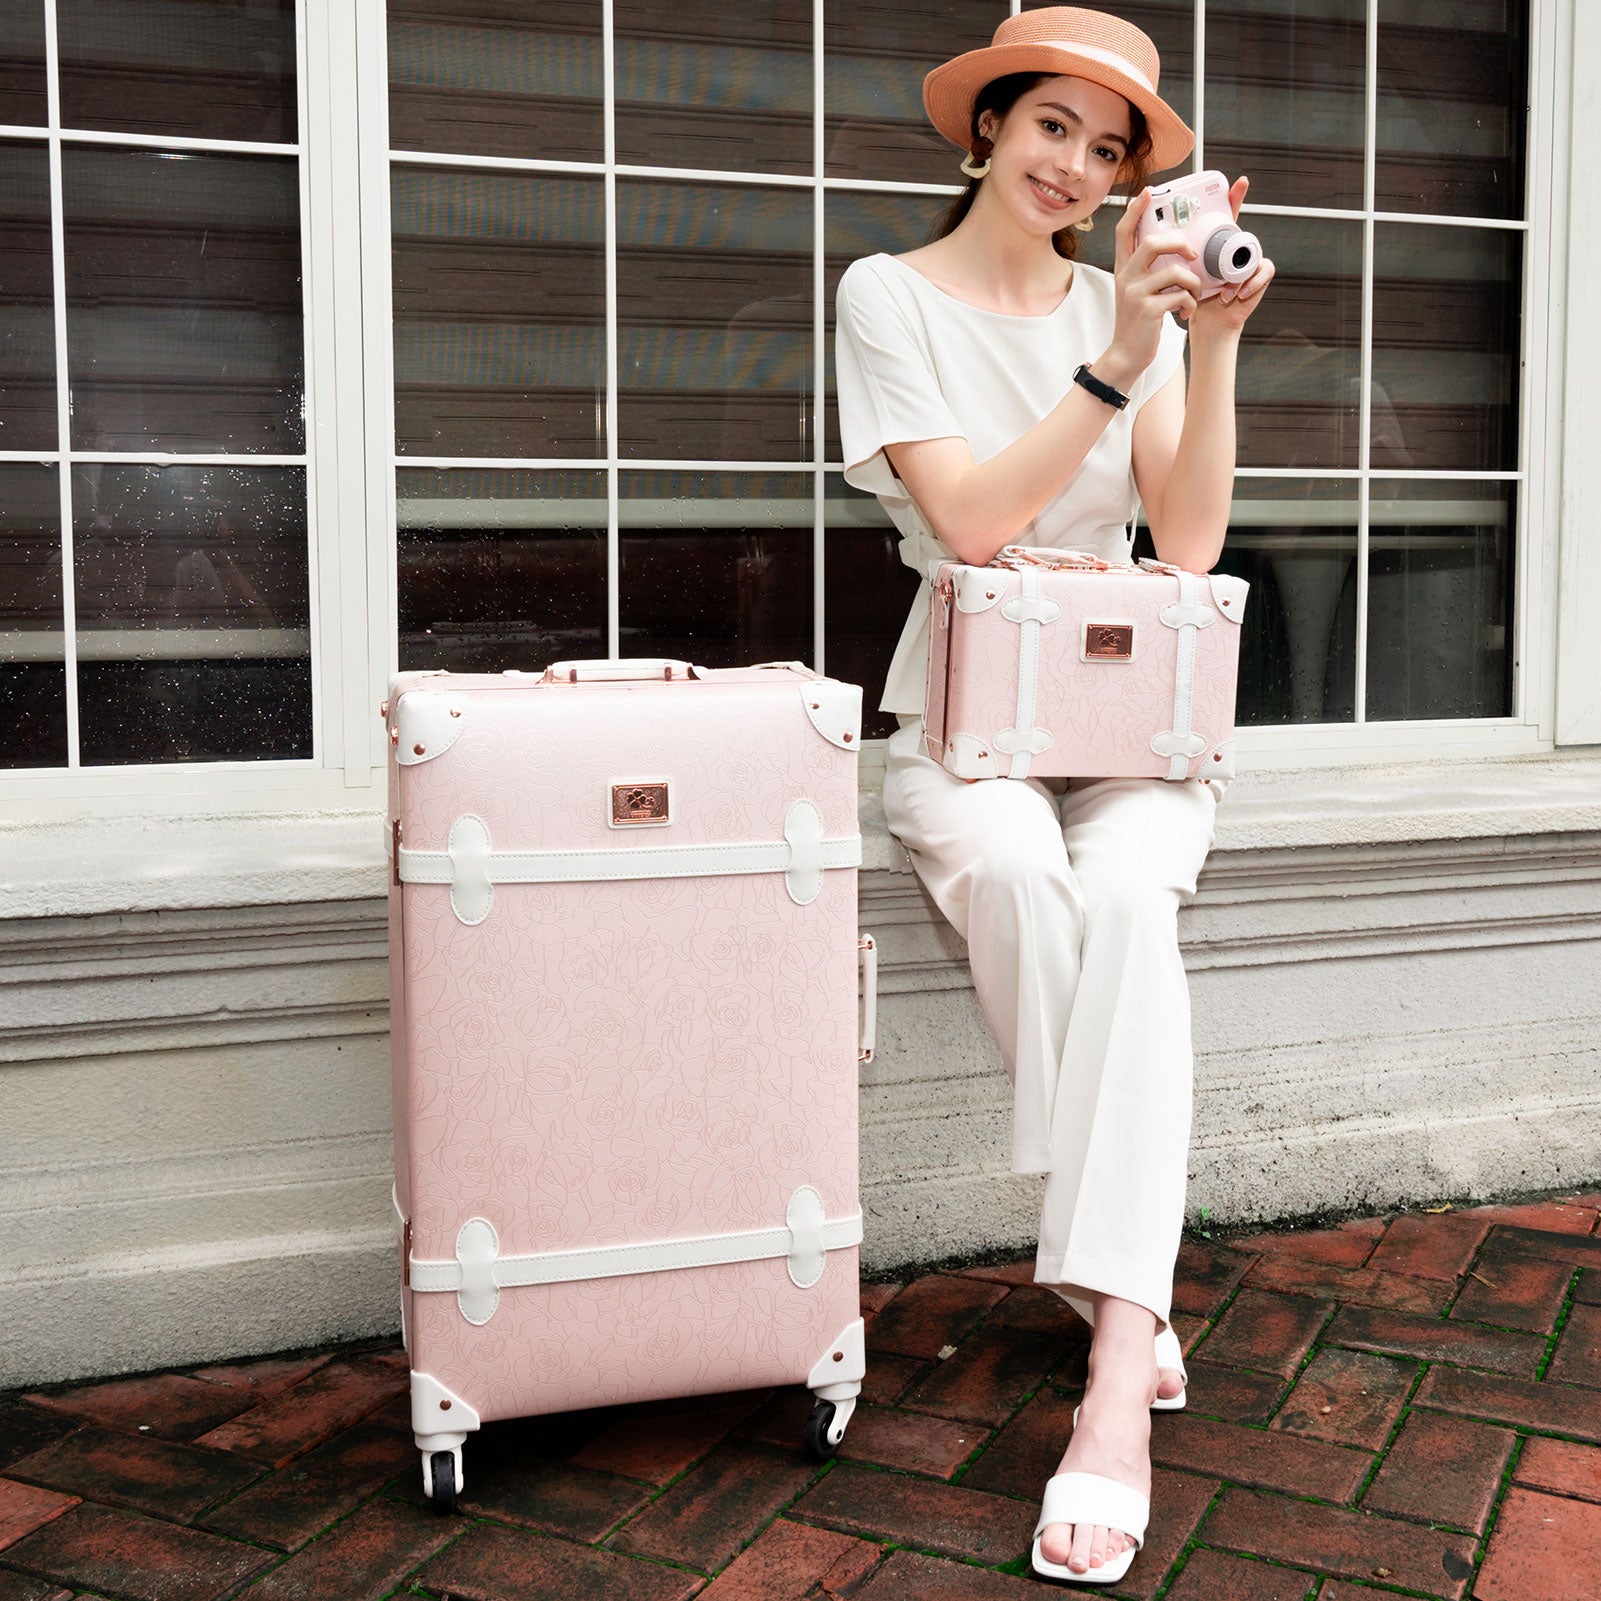 urecity vintage suitcase set for women, vintage luggage sets for women –  urecity-luggage